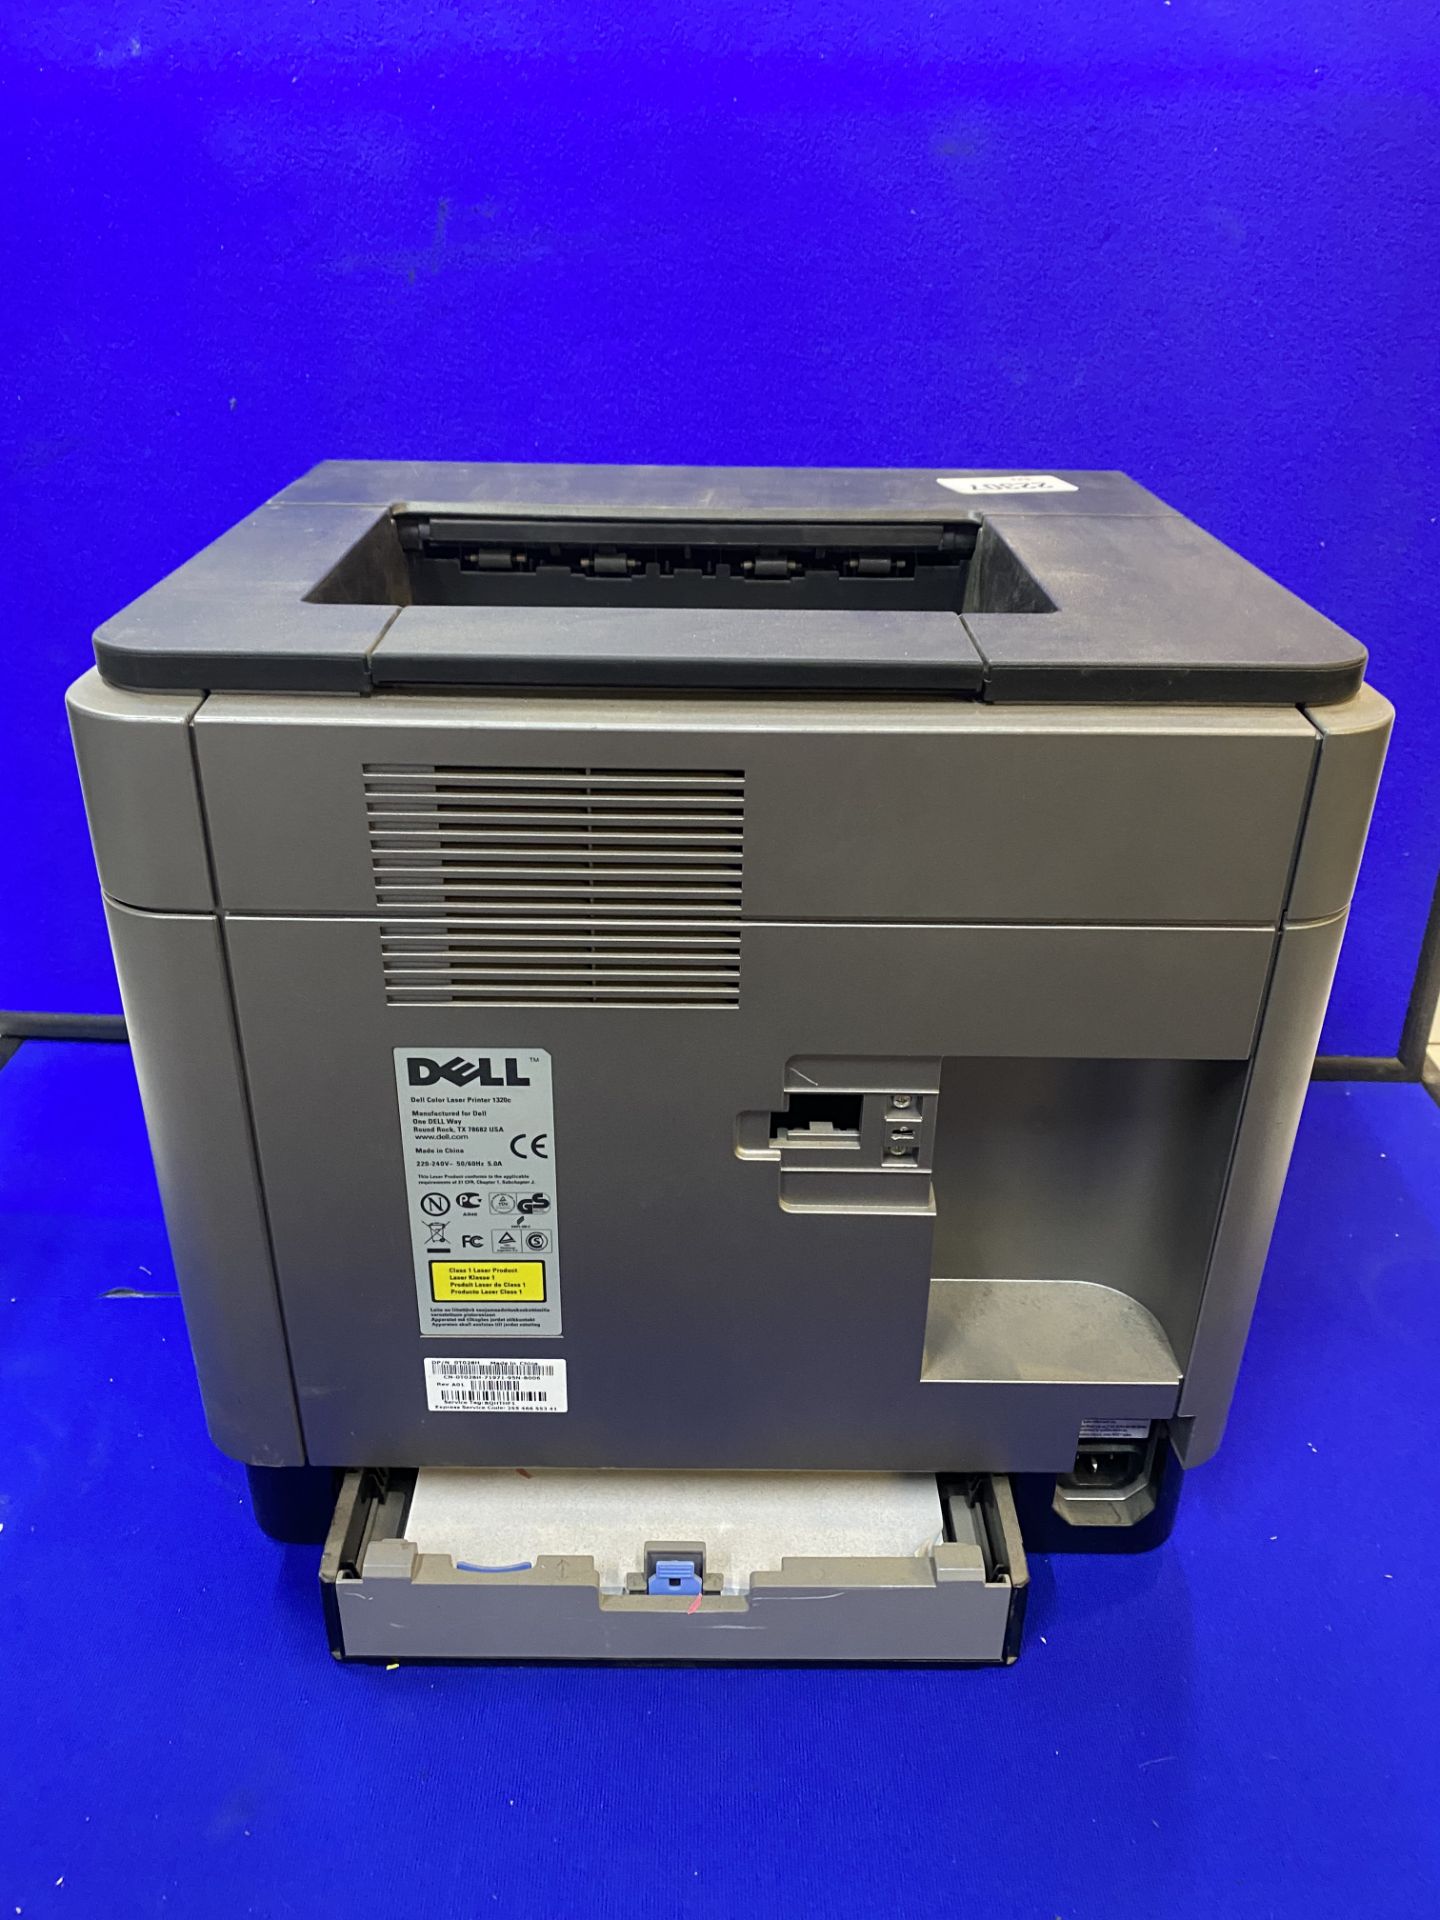 Dell 1320c Colour Network Laser Printer - Image 16 of 18